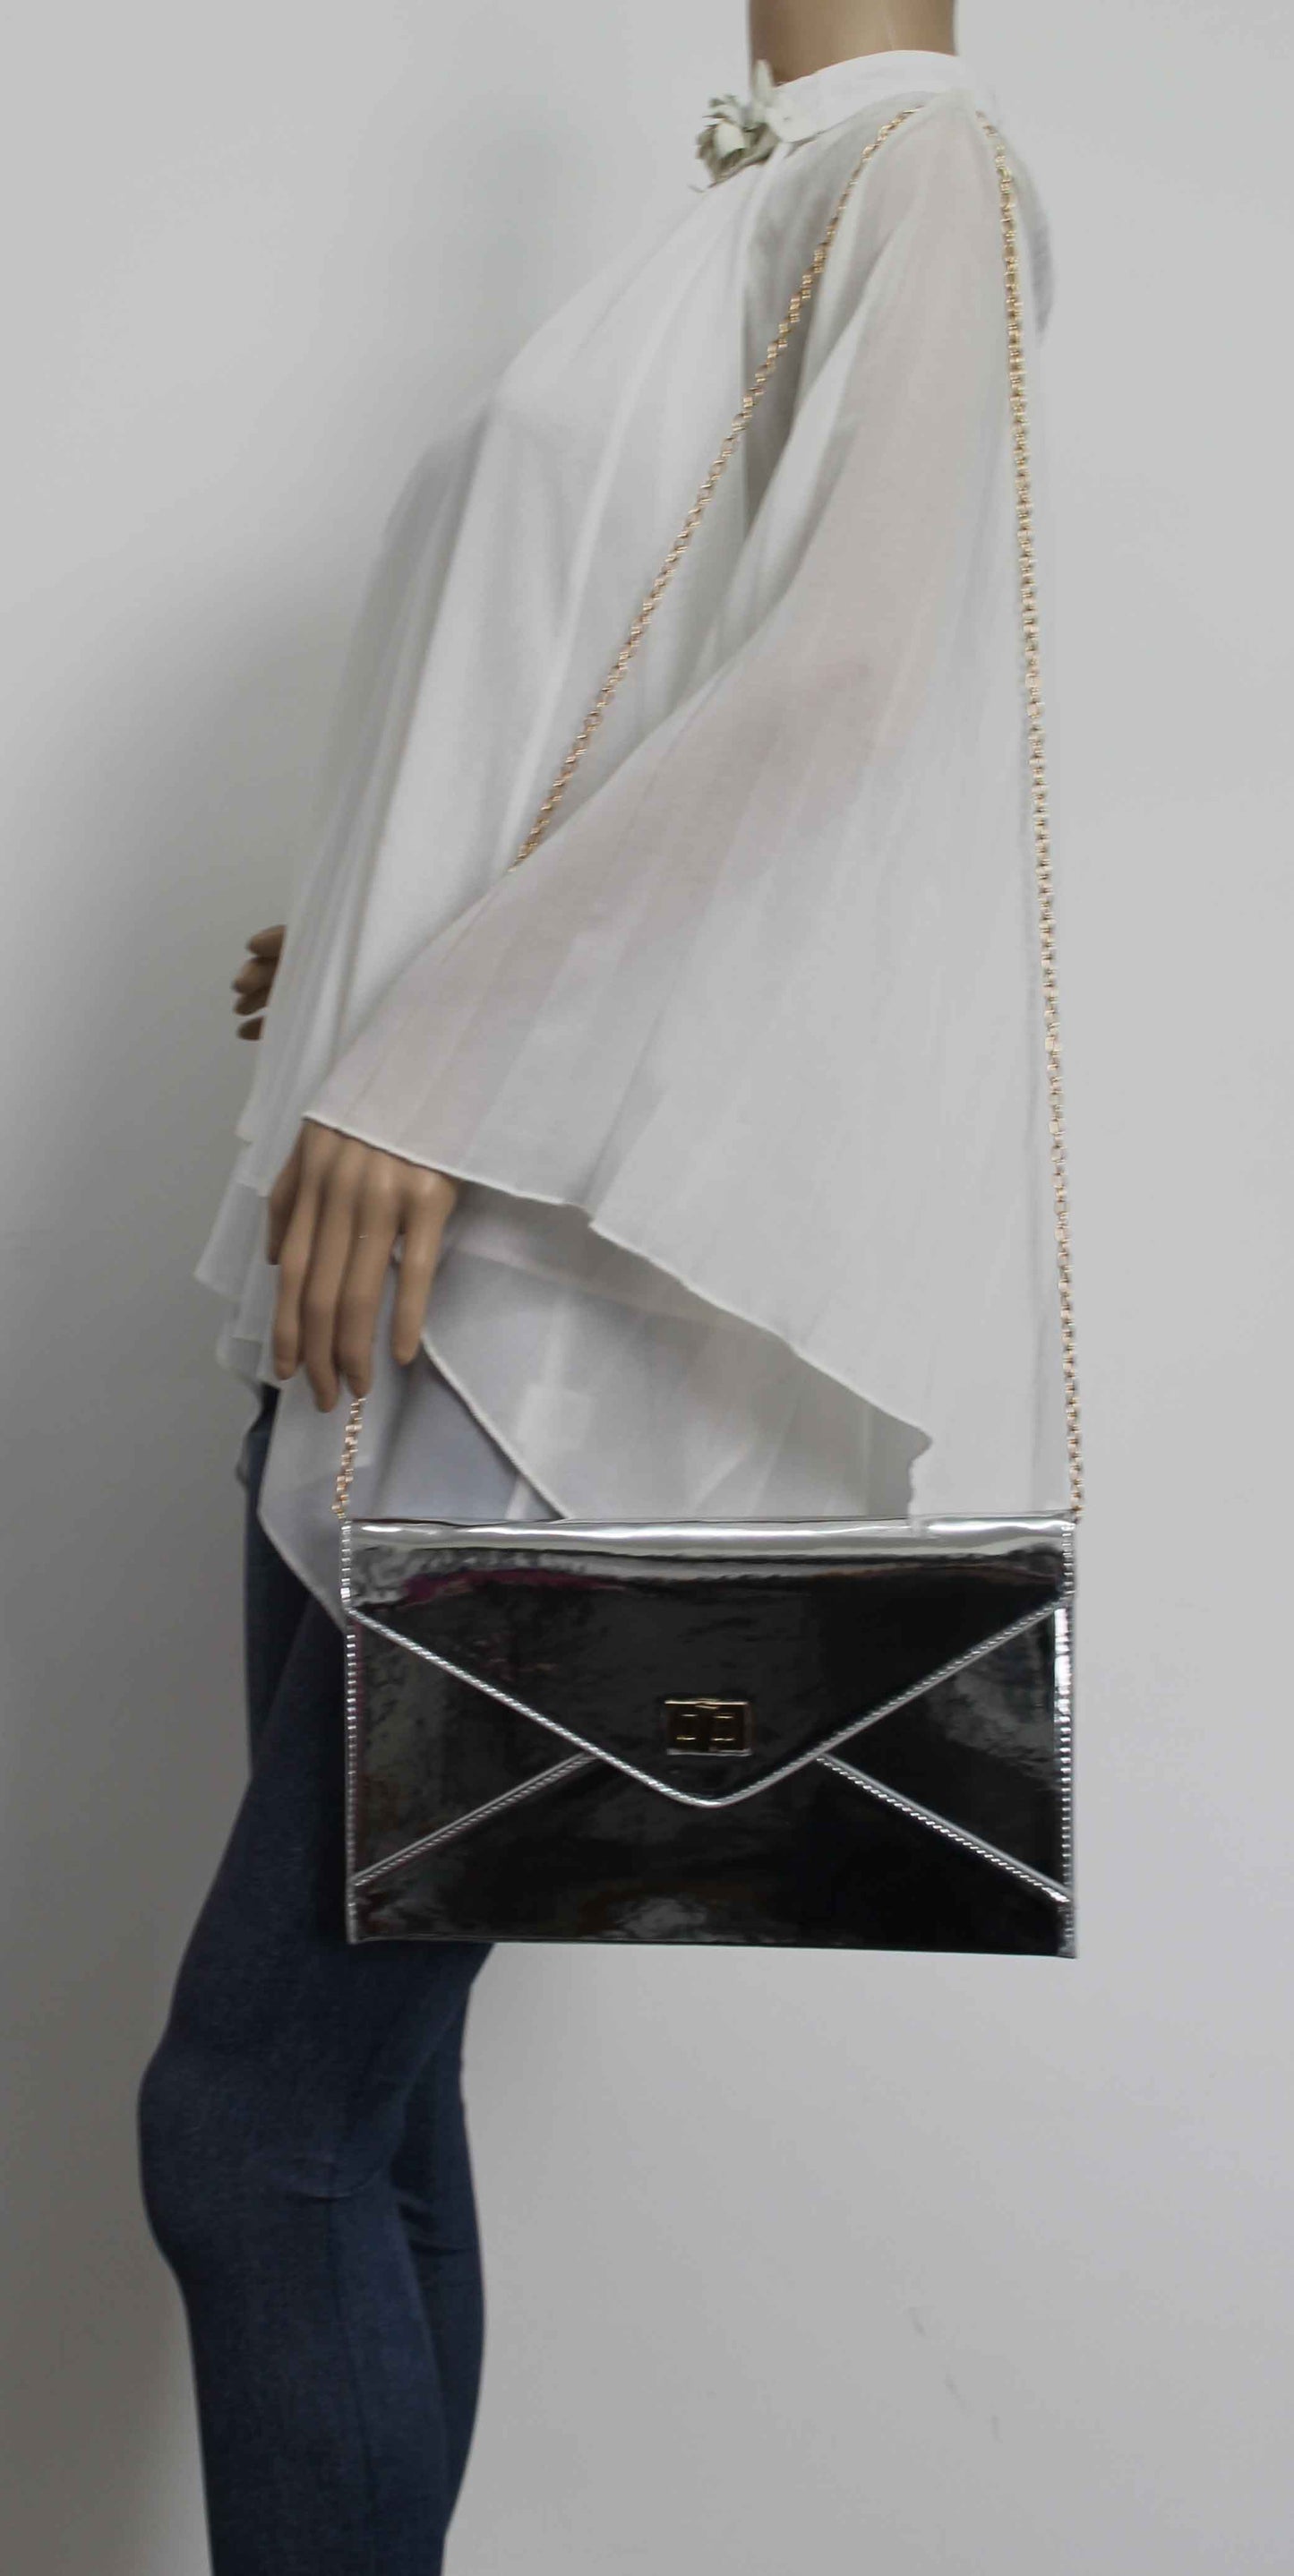 SWANKYSWANS Sarah Envelope Clutch Bag Silver Cute Cheap Clutch Bag For Weddings School and Work